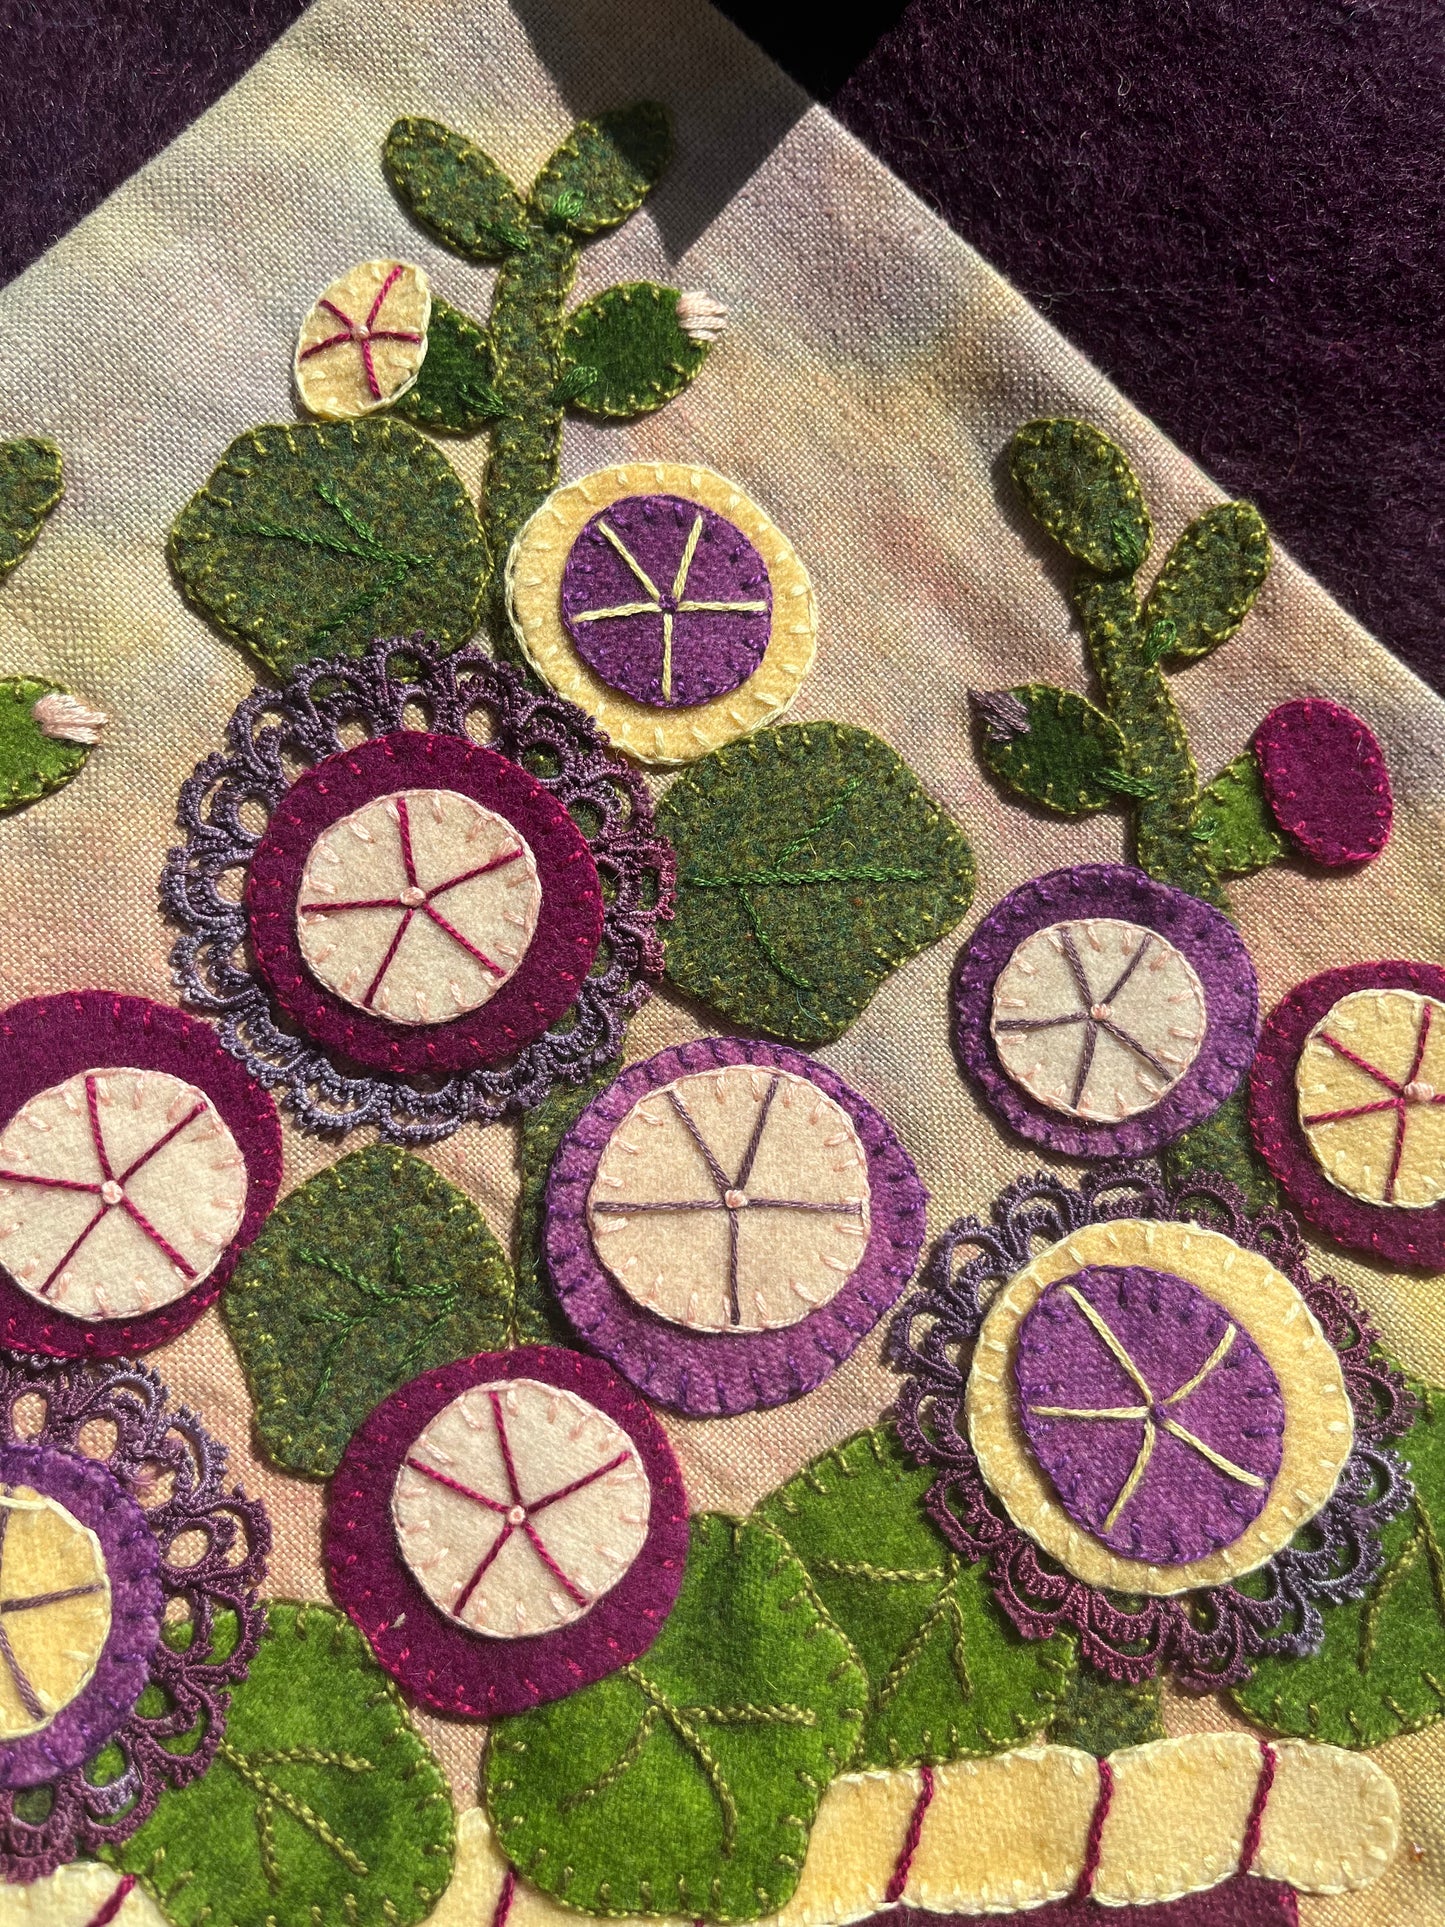 Applique Art Piece with Purple Flowers in Pot